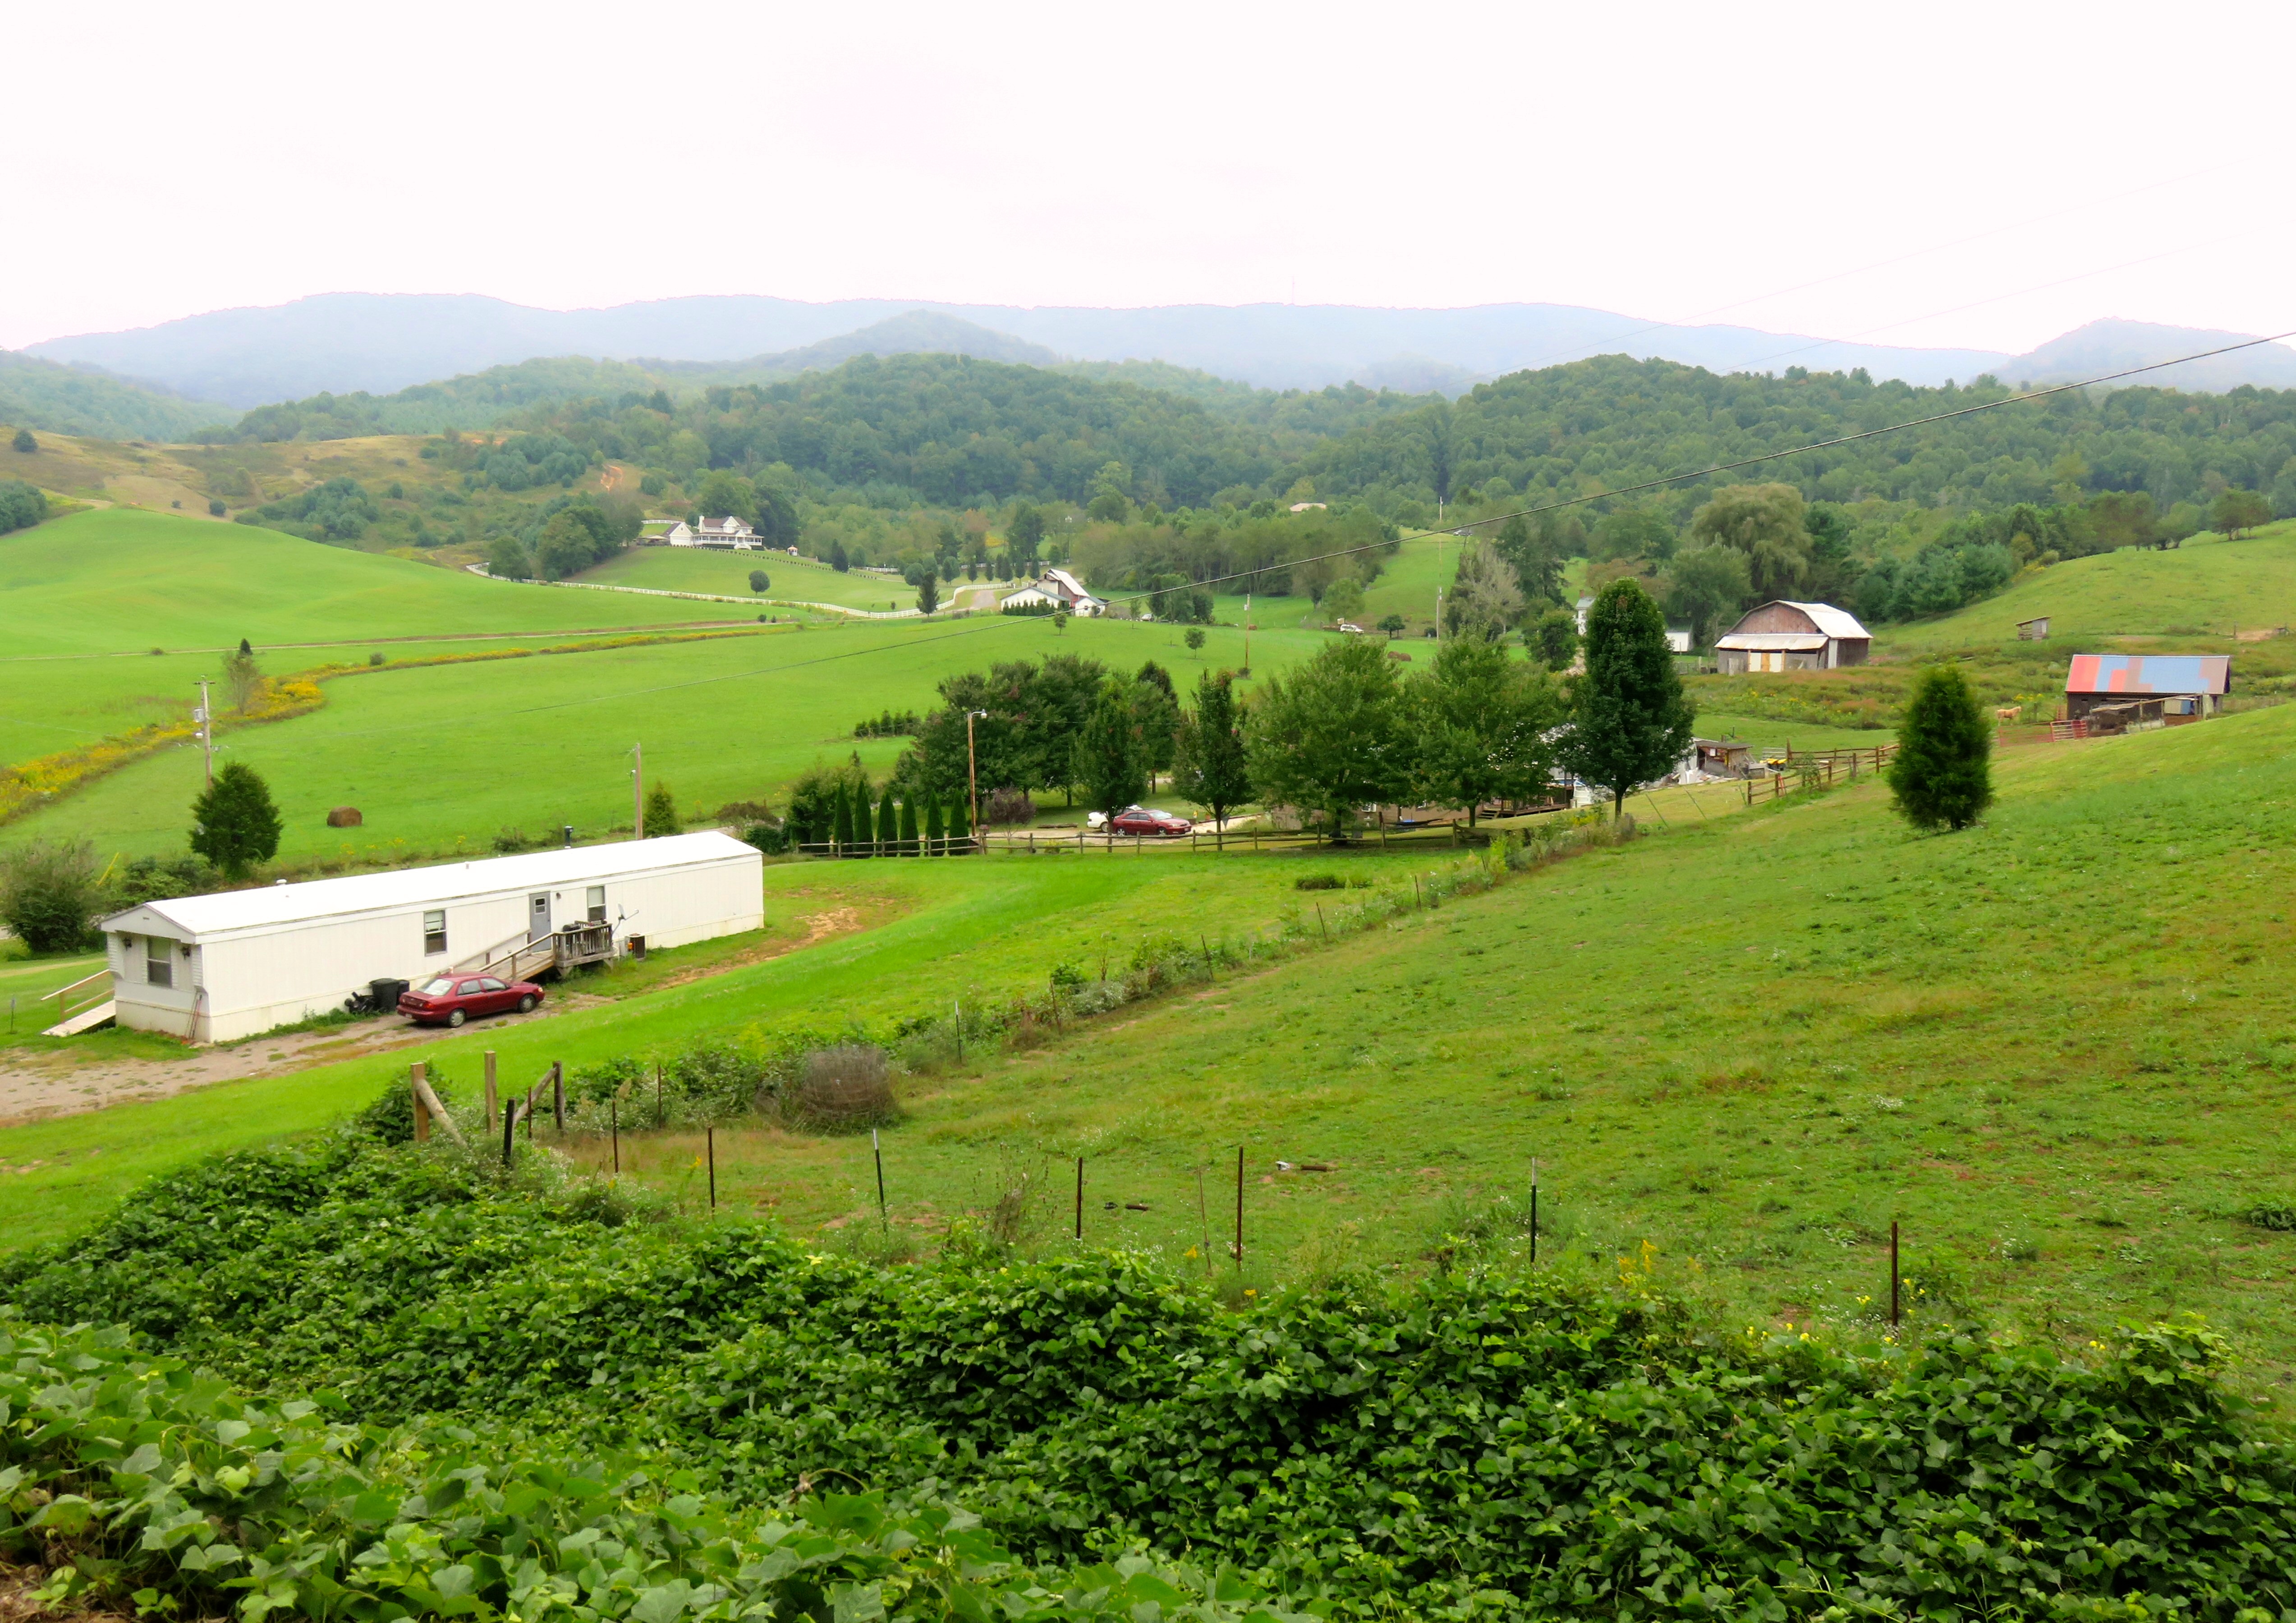 File:Farm-near-Mountain-City-tn1.jpg - Wikimedia Commons